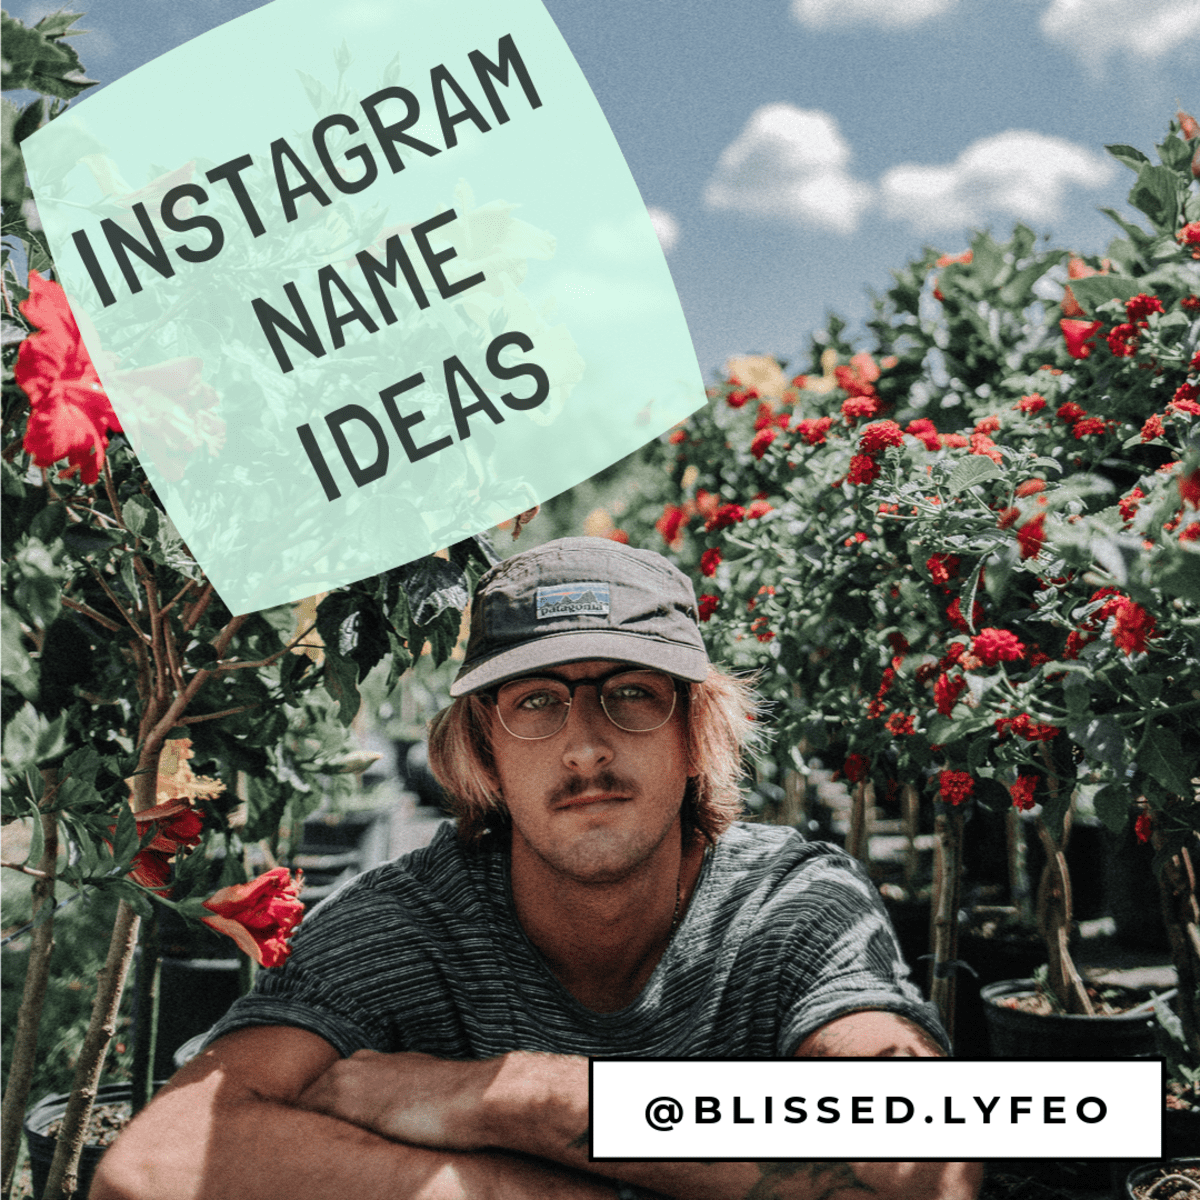 stories___ideas🌈 (@stories___ideas) • Instagram photos and videos